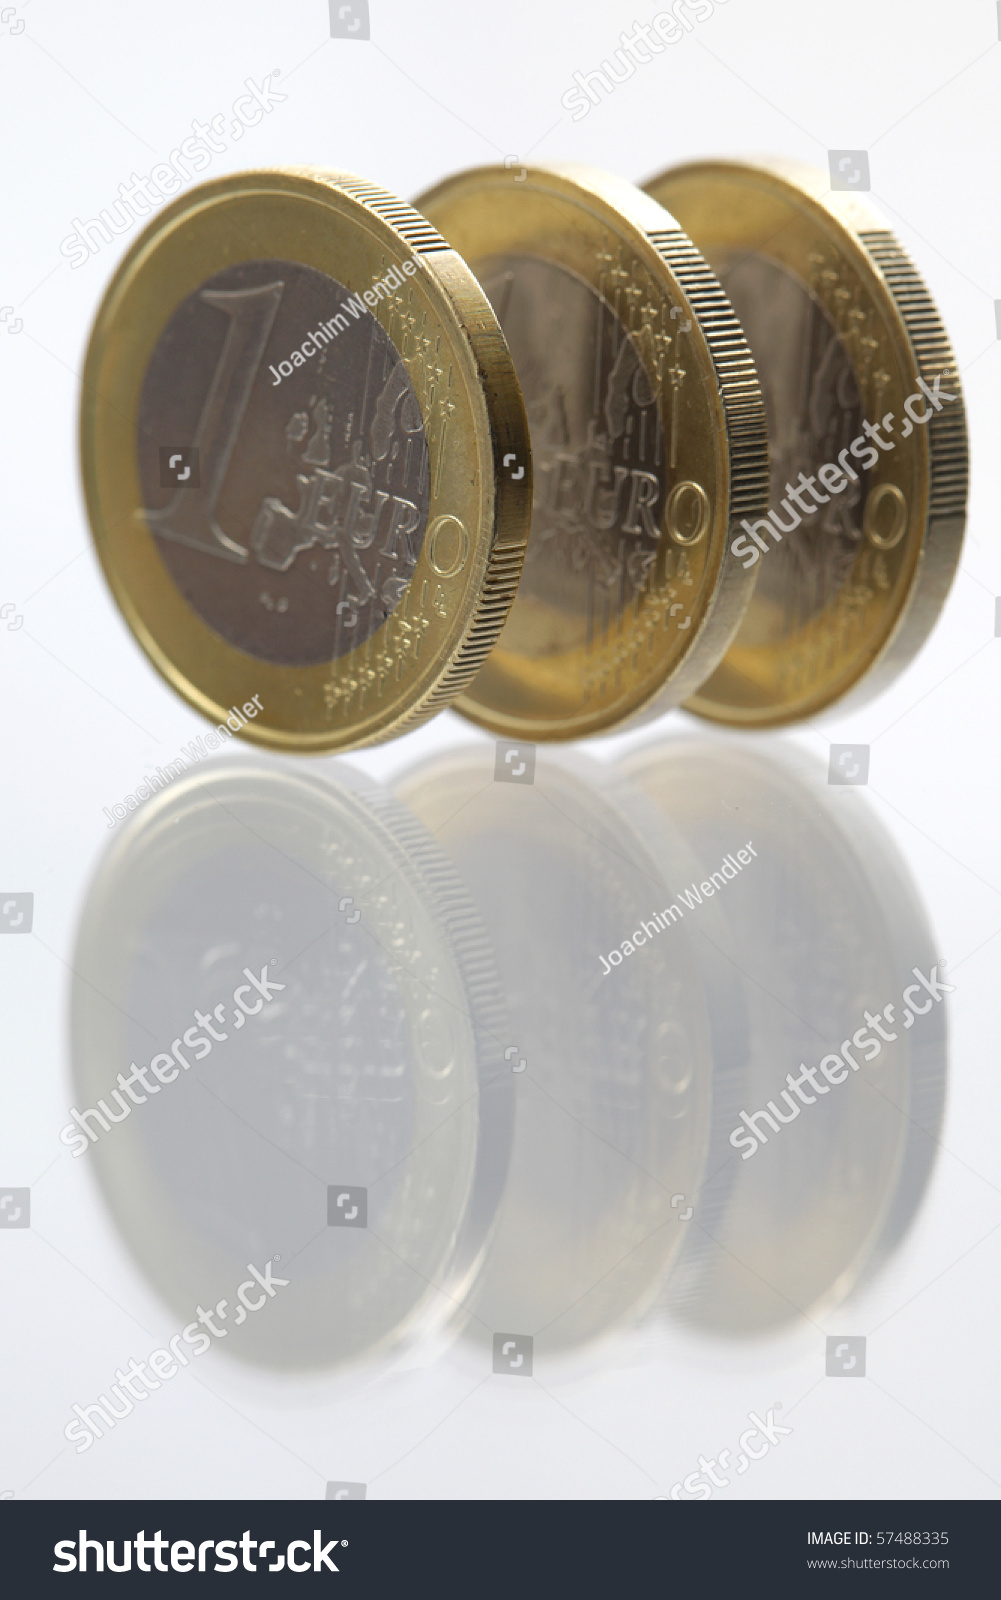 stock-photo-three-euro-coins-with-reflec